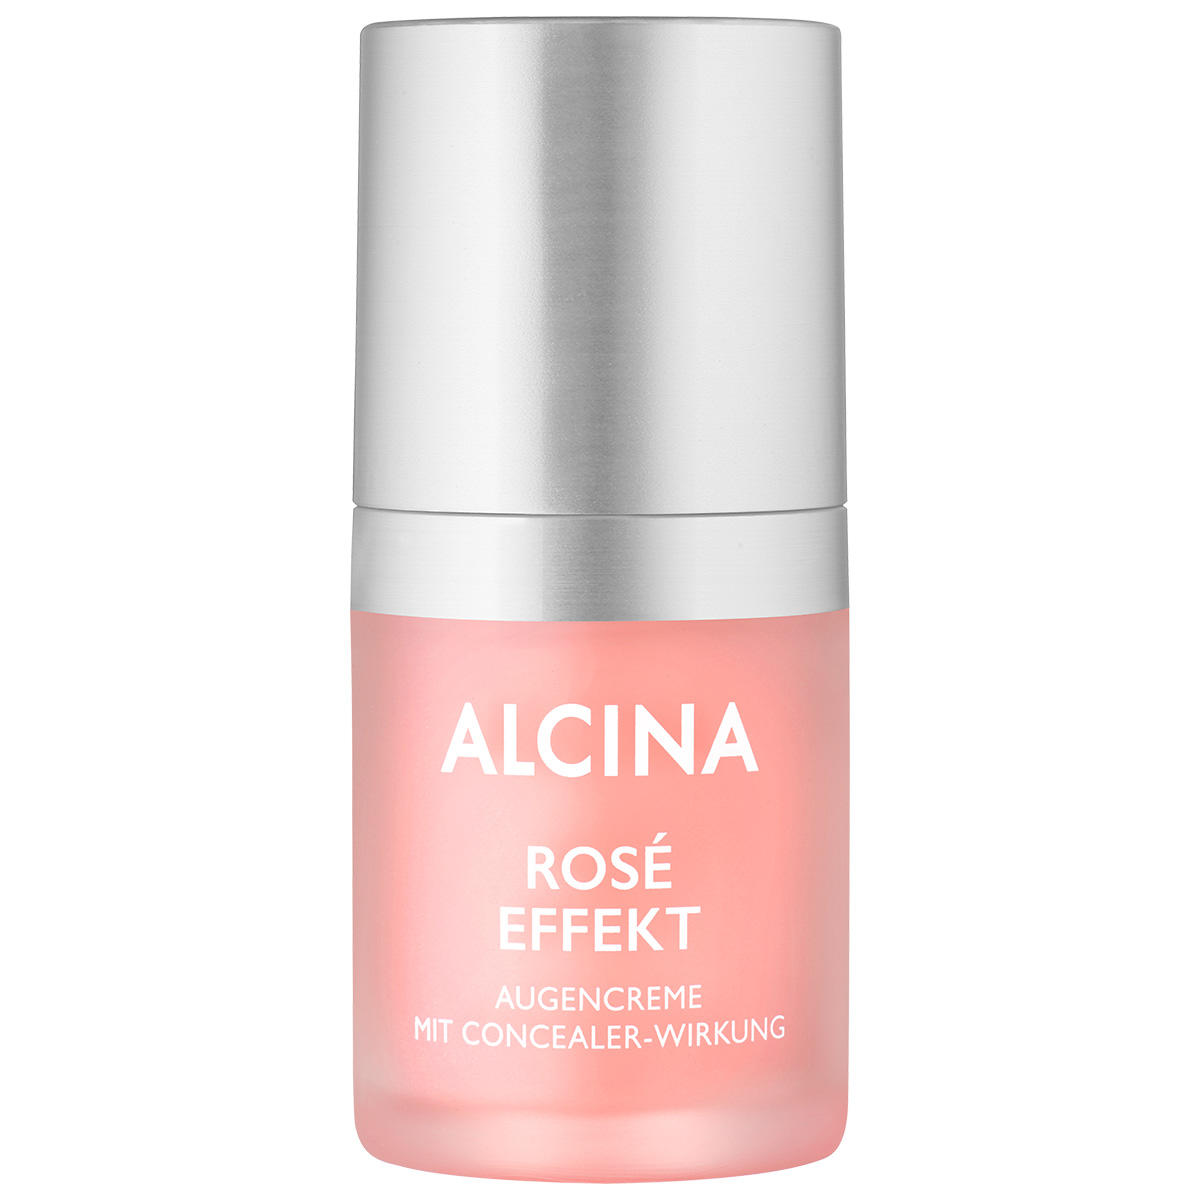 Alcina Rosé Effekt Augencreme 15 ml - 1